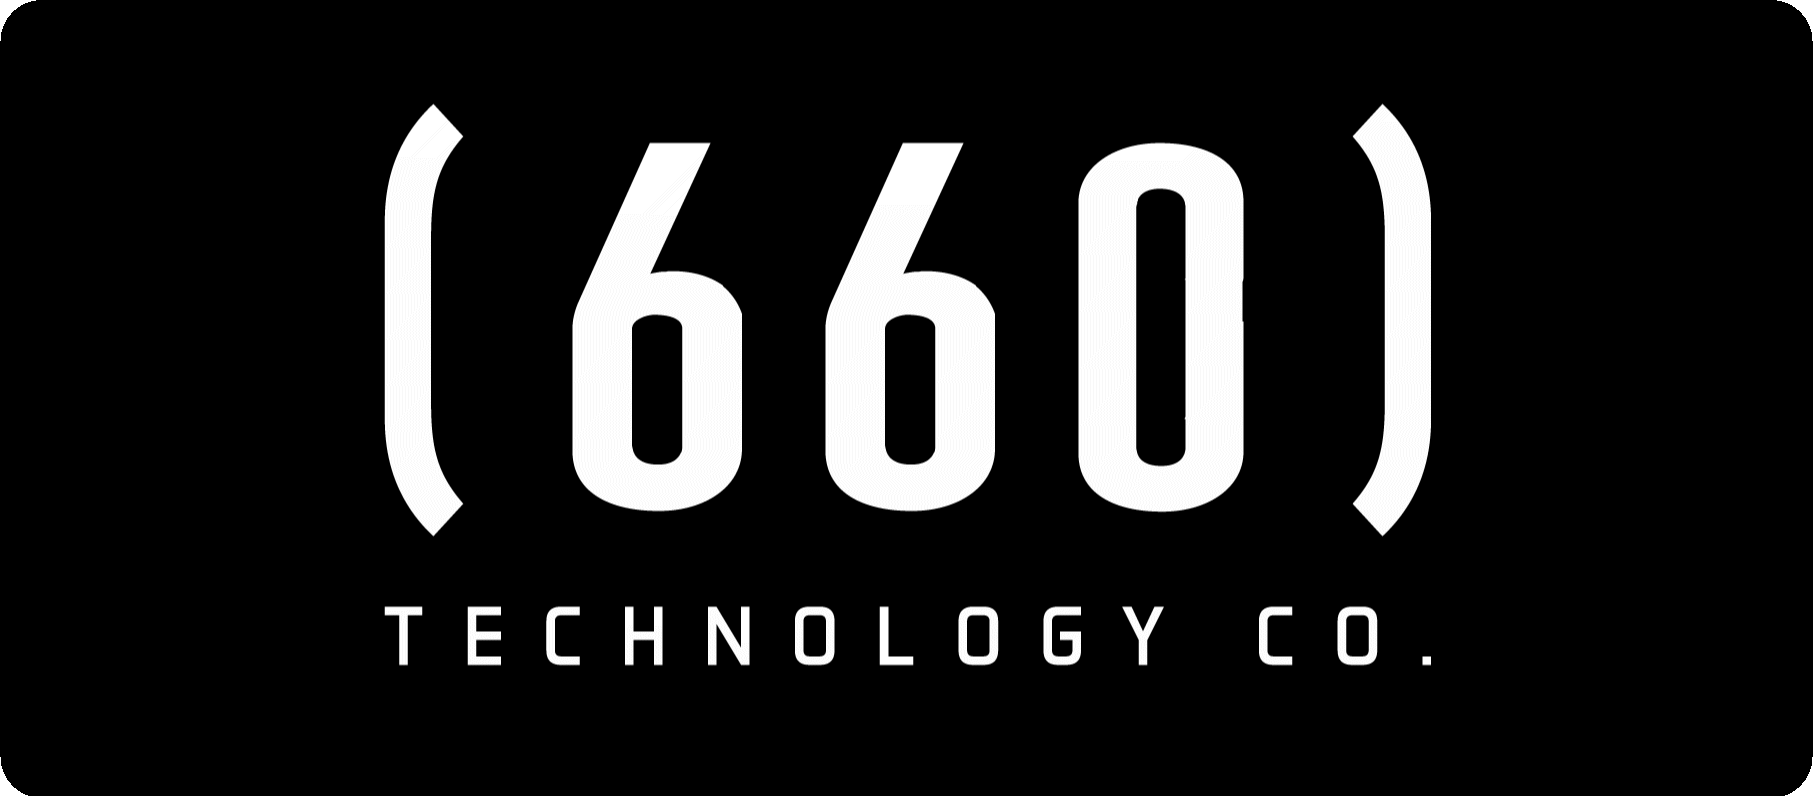 660 Technology Co.